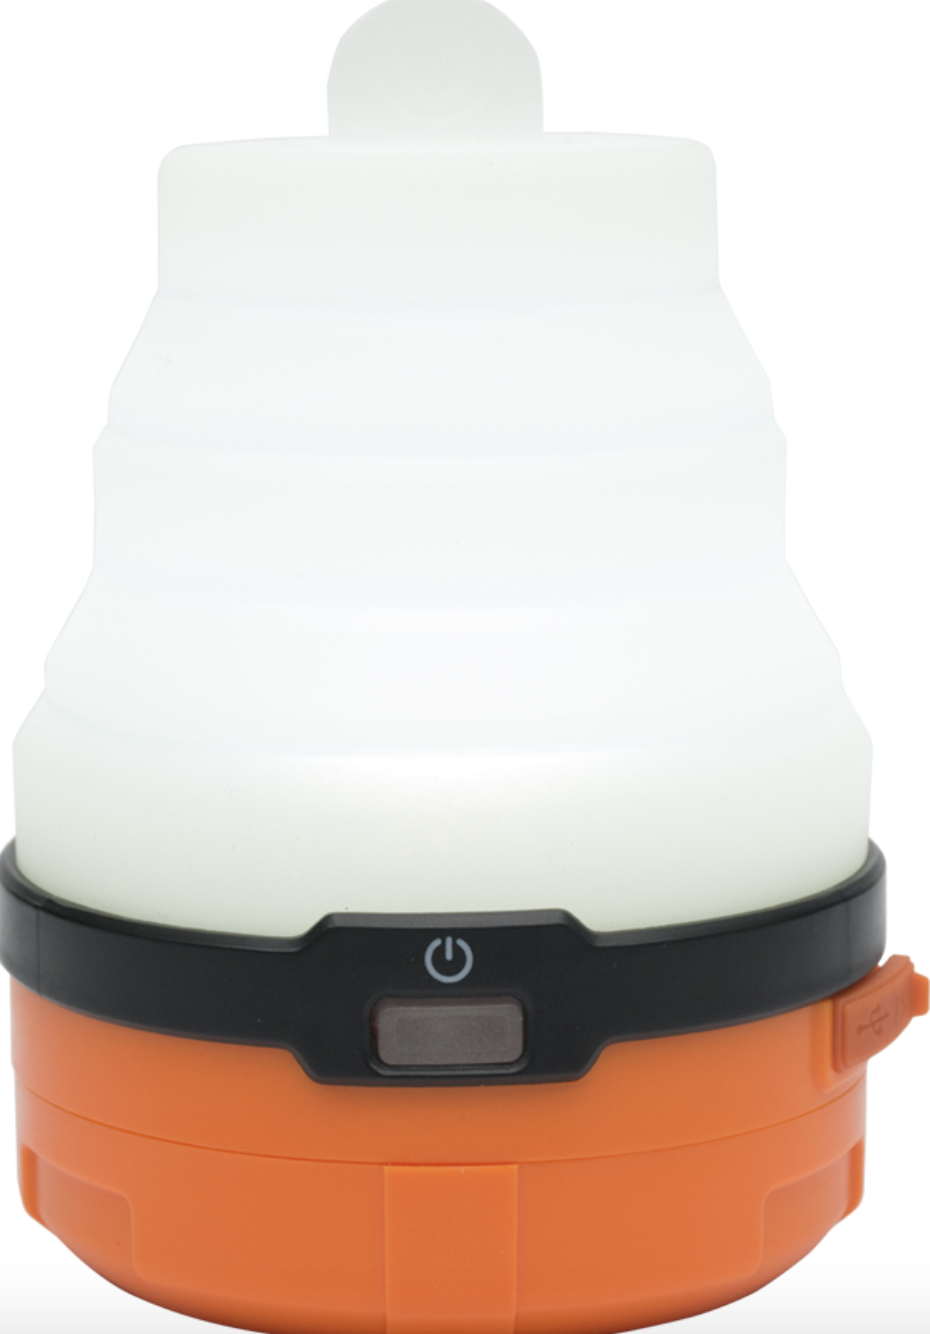 white lantern on an orange base and USB connection